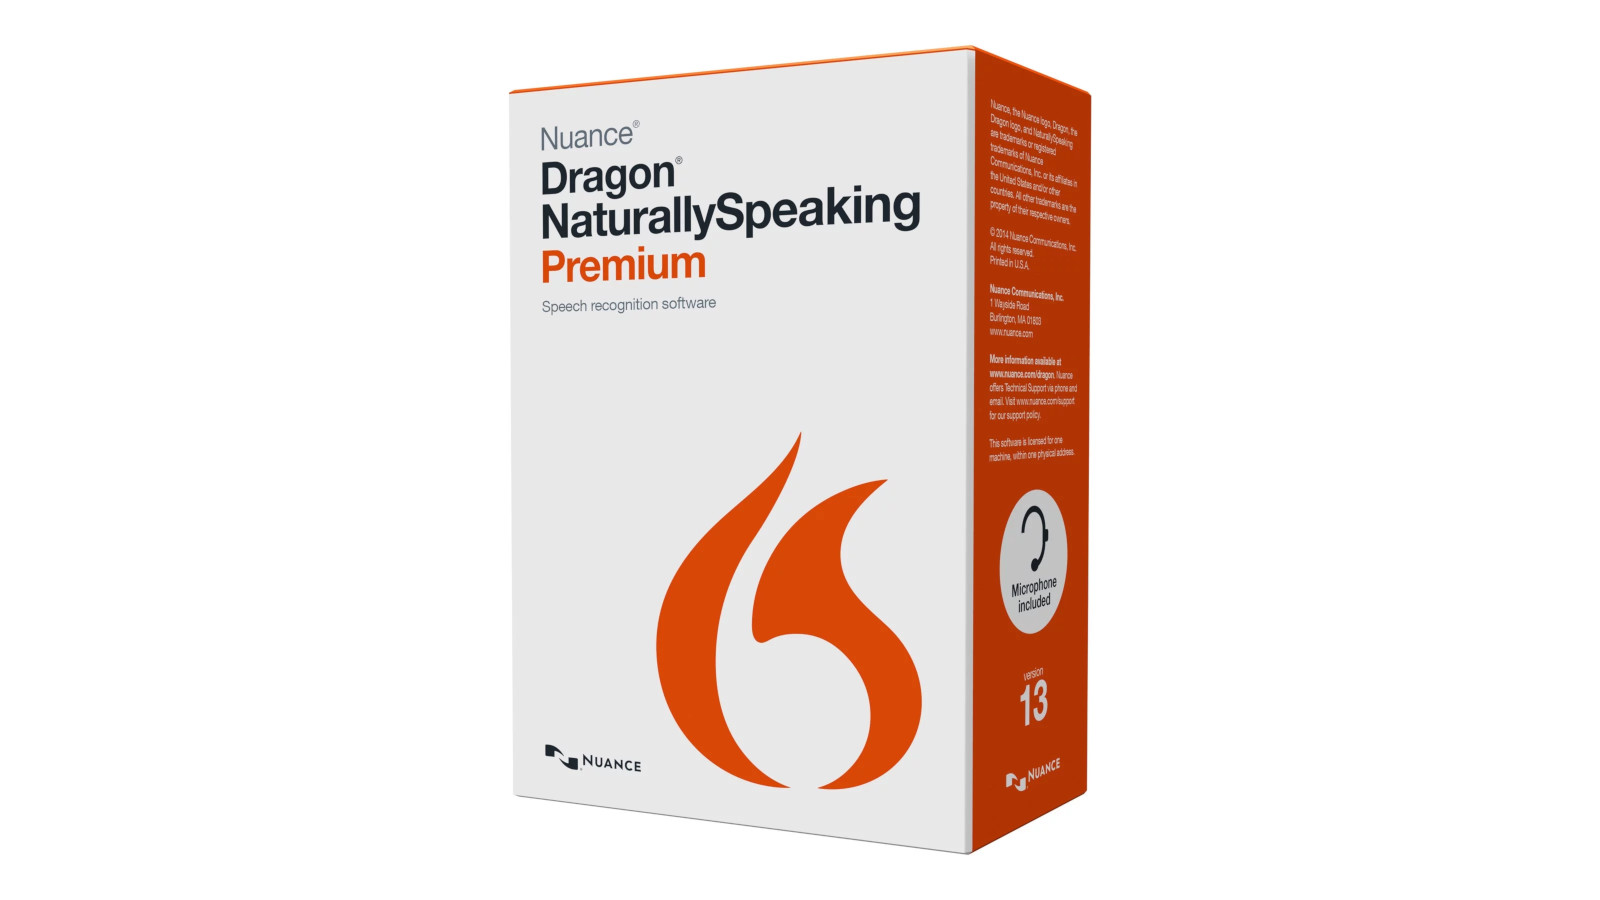 Nuance Dragon NaturallySpeaking Premium 13 Key (Lifetime / 1 PC), $13.73